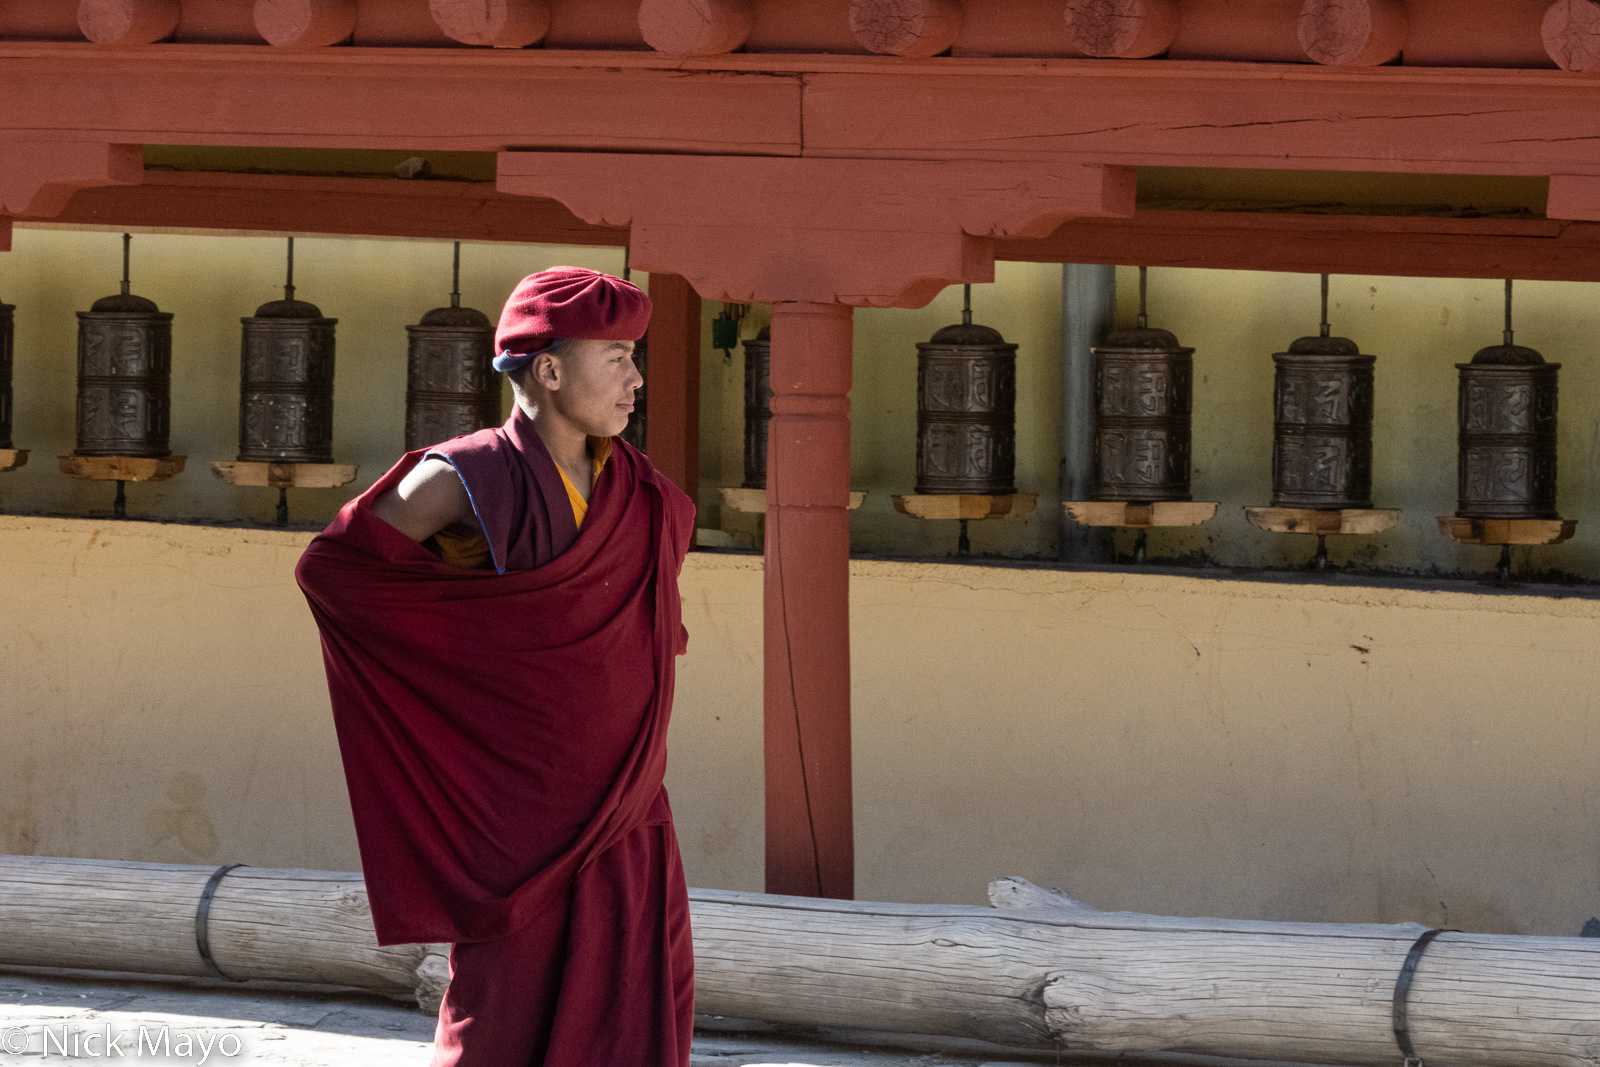 A Hemis monastery monk standing beside the wall of prayer wheels.